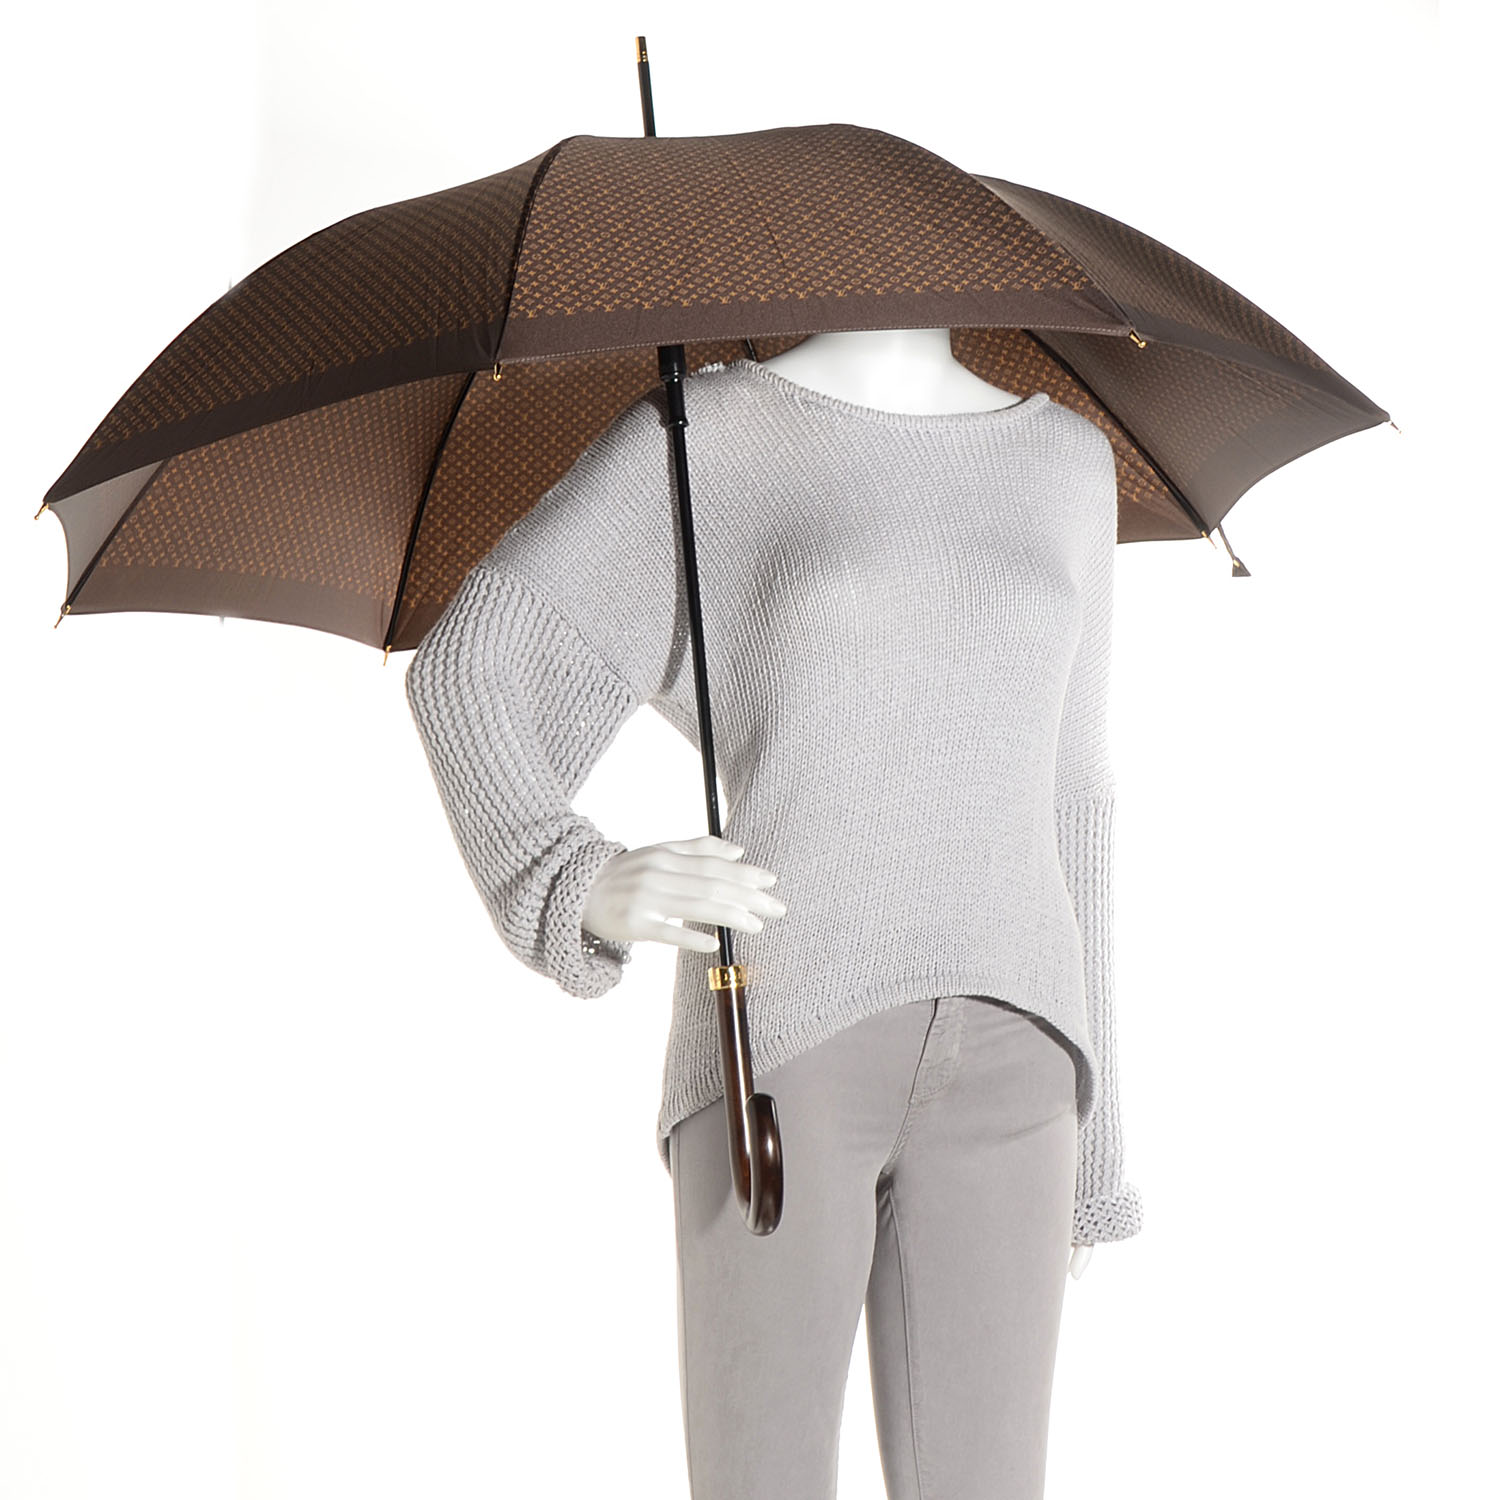 _EA_RT_H™🌏 on X: Louis Vuitton umbrella 635,000 naira, does it cover  shame? 😳😤  / X